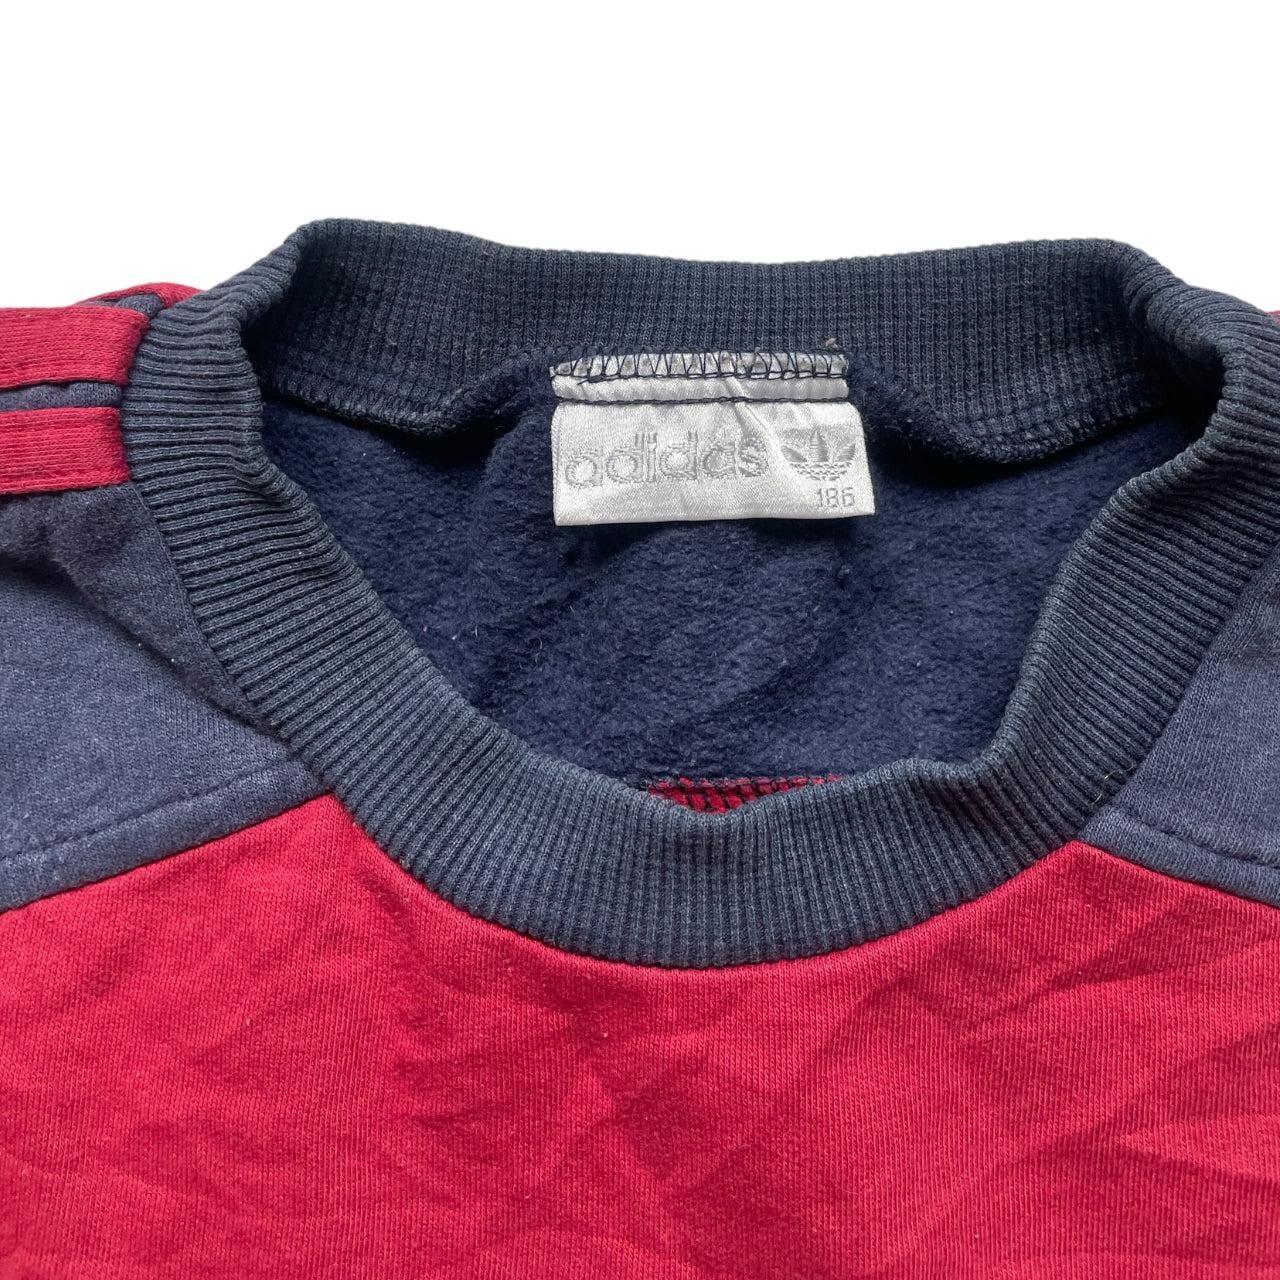 Adidas Vintage Sweatshirt 3 Stripes Retro L Size Multi A_37